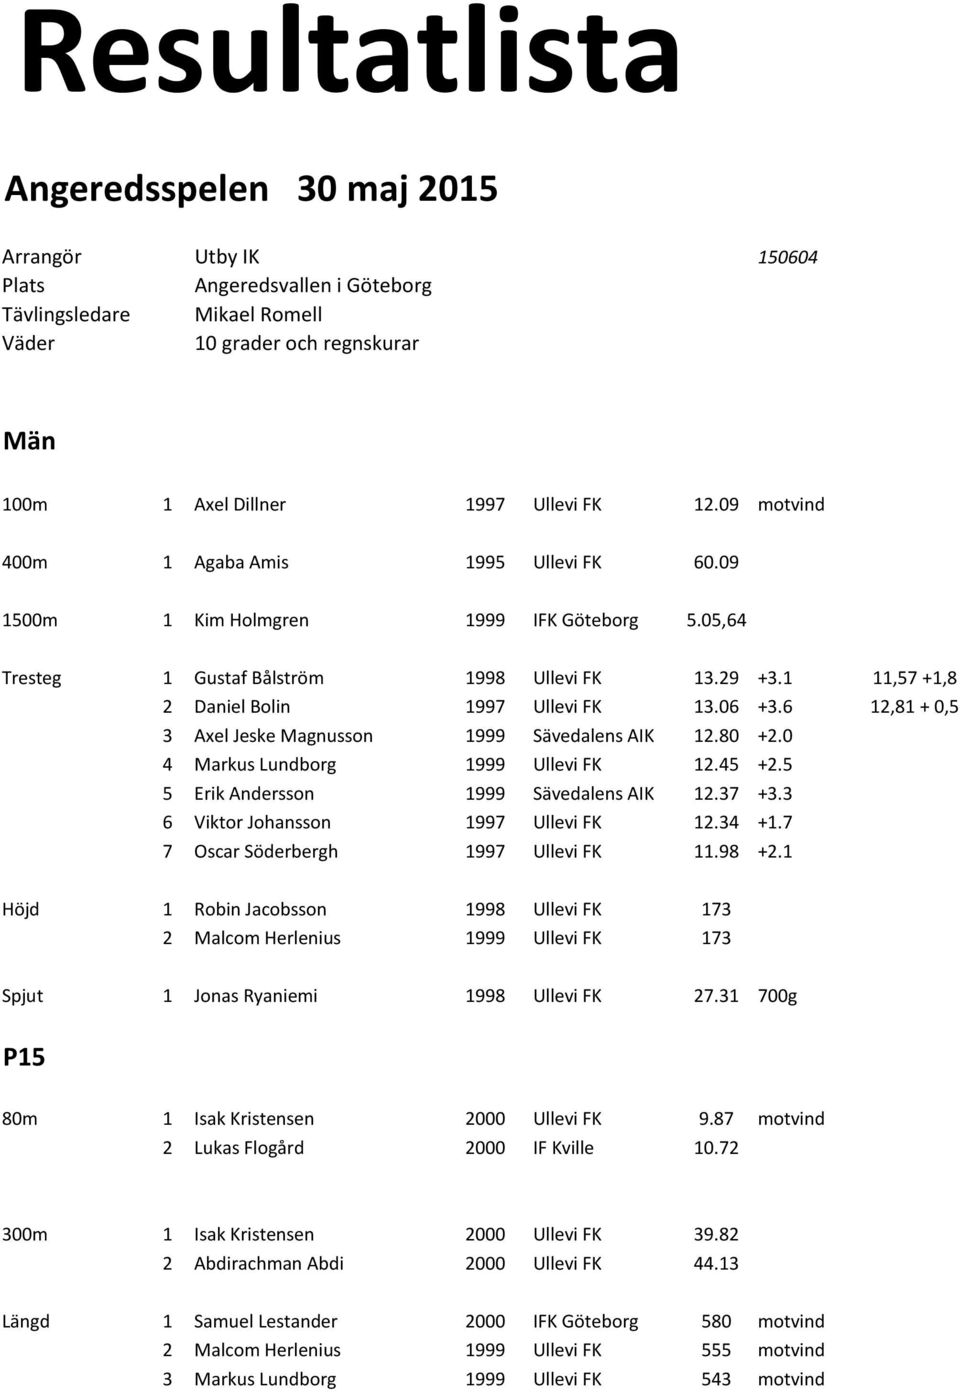 6 12,81 + 0,5 3 Axel Jeske Magnusson 1999 Sävedalens AIK 12.80 +2.0 4 Markus Lundborg 1999 Ullevi FK 12.45 +2.5 5 Erik Andersson 1999 Sävedalens AIK 12.37 +3.3 6 Viktor Johansson 1997 Ullevi FK 12.